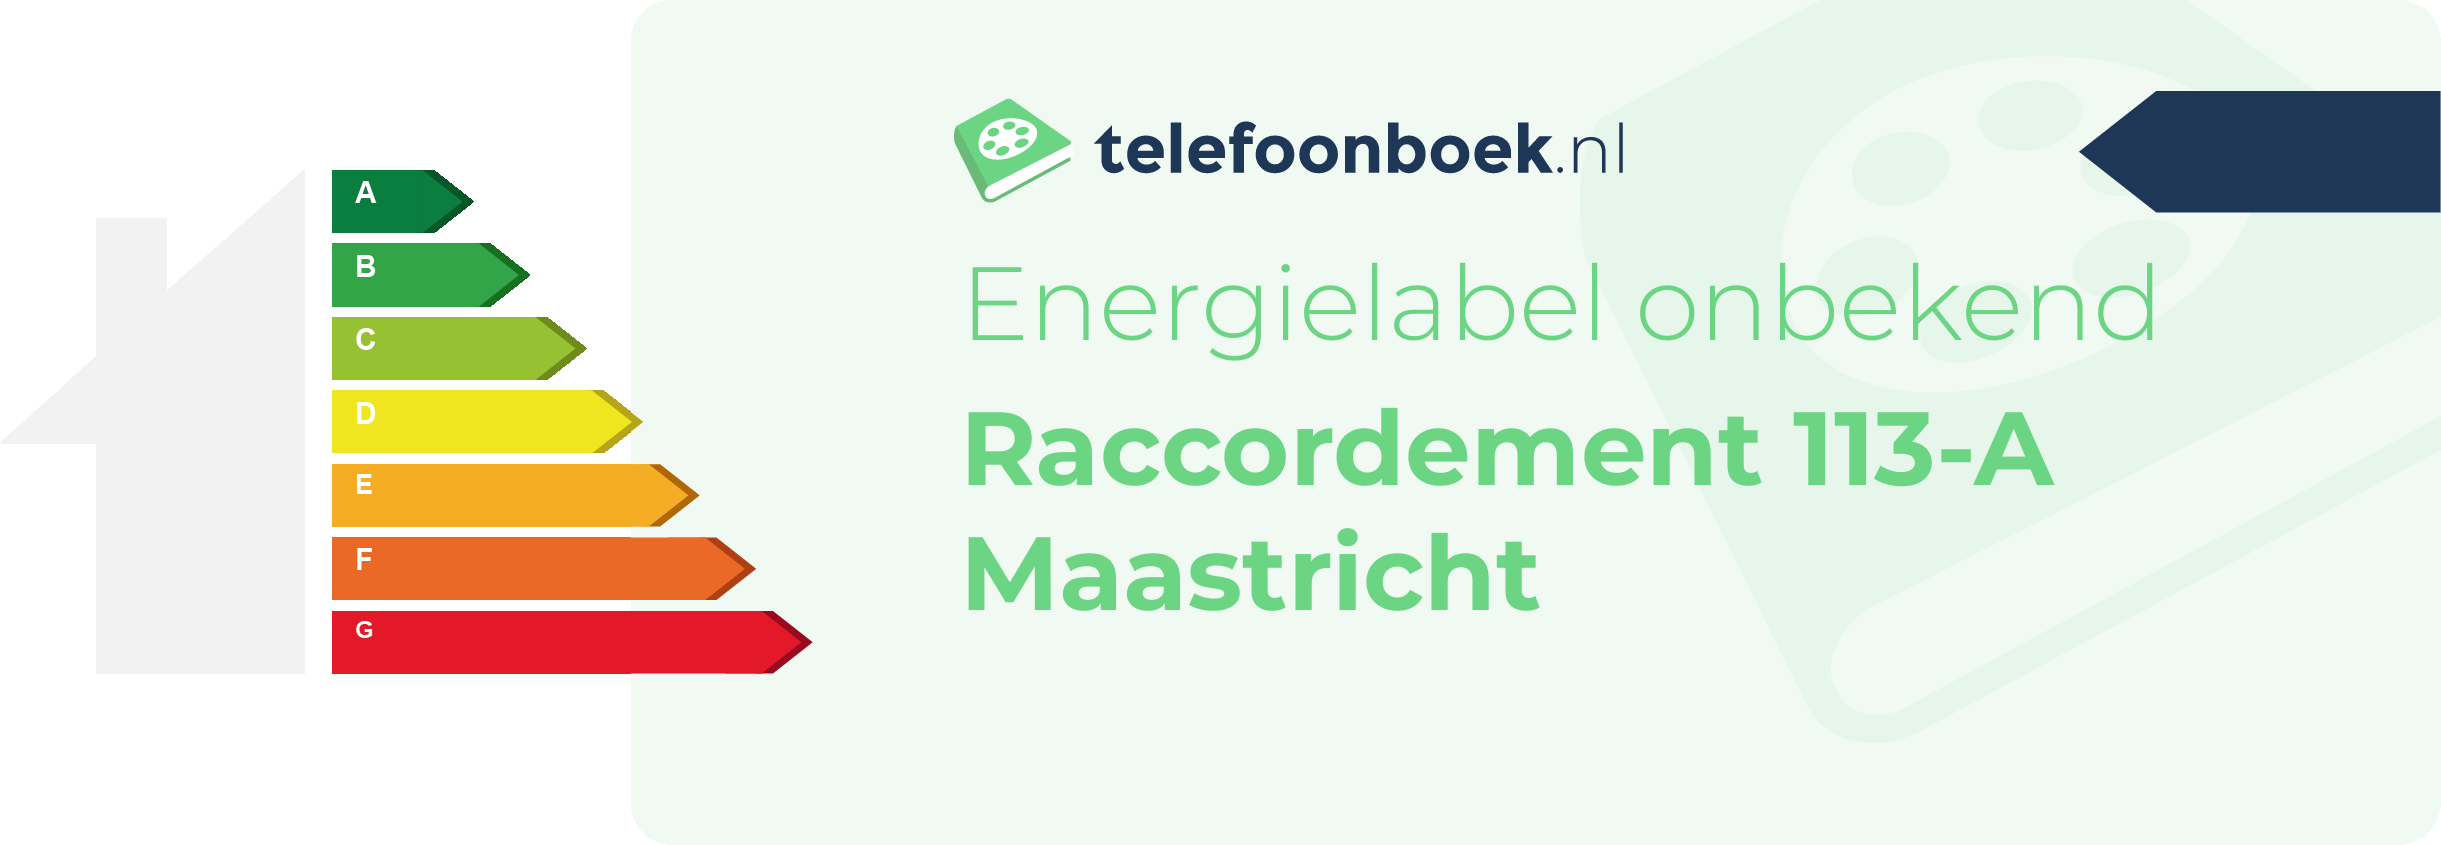 Energielabel Raccordement 113-A Maastricht